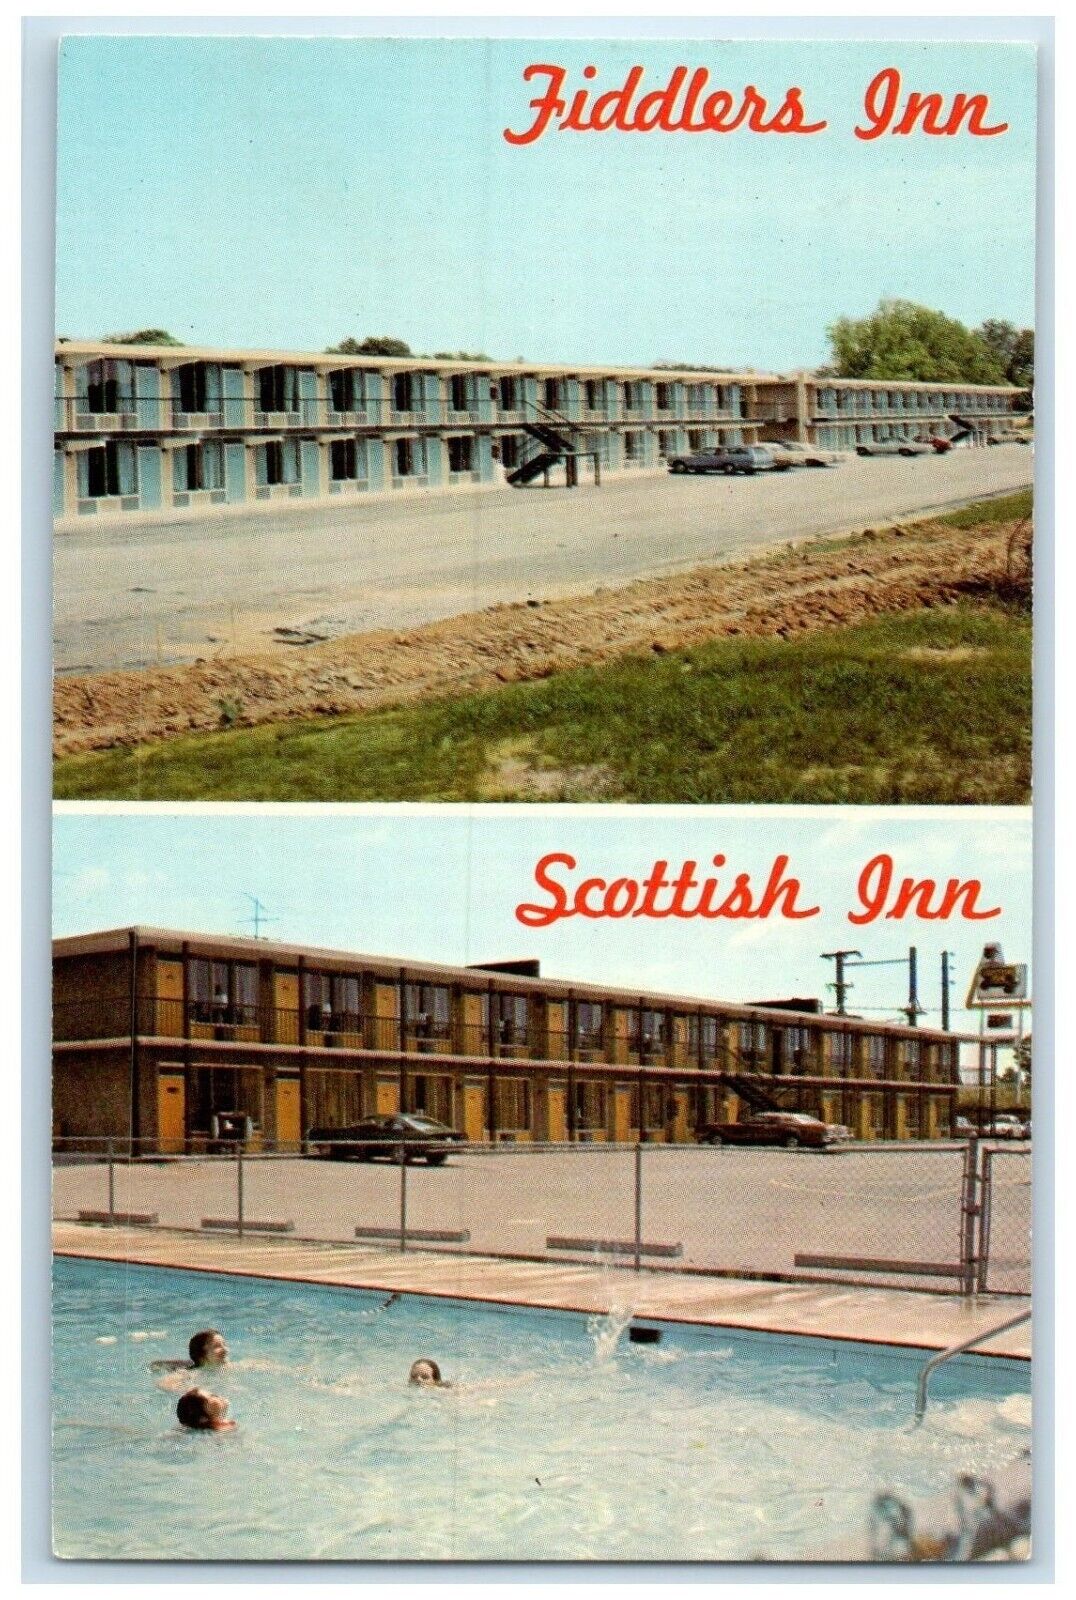 Nashville Tennessee TN Postcard Scottish Inn And Fiddlers Inn Dual View Vintage